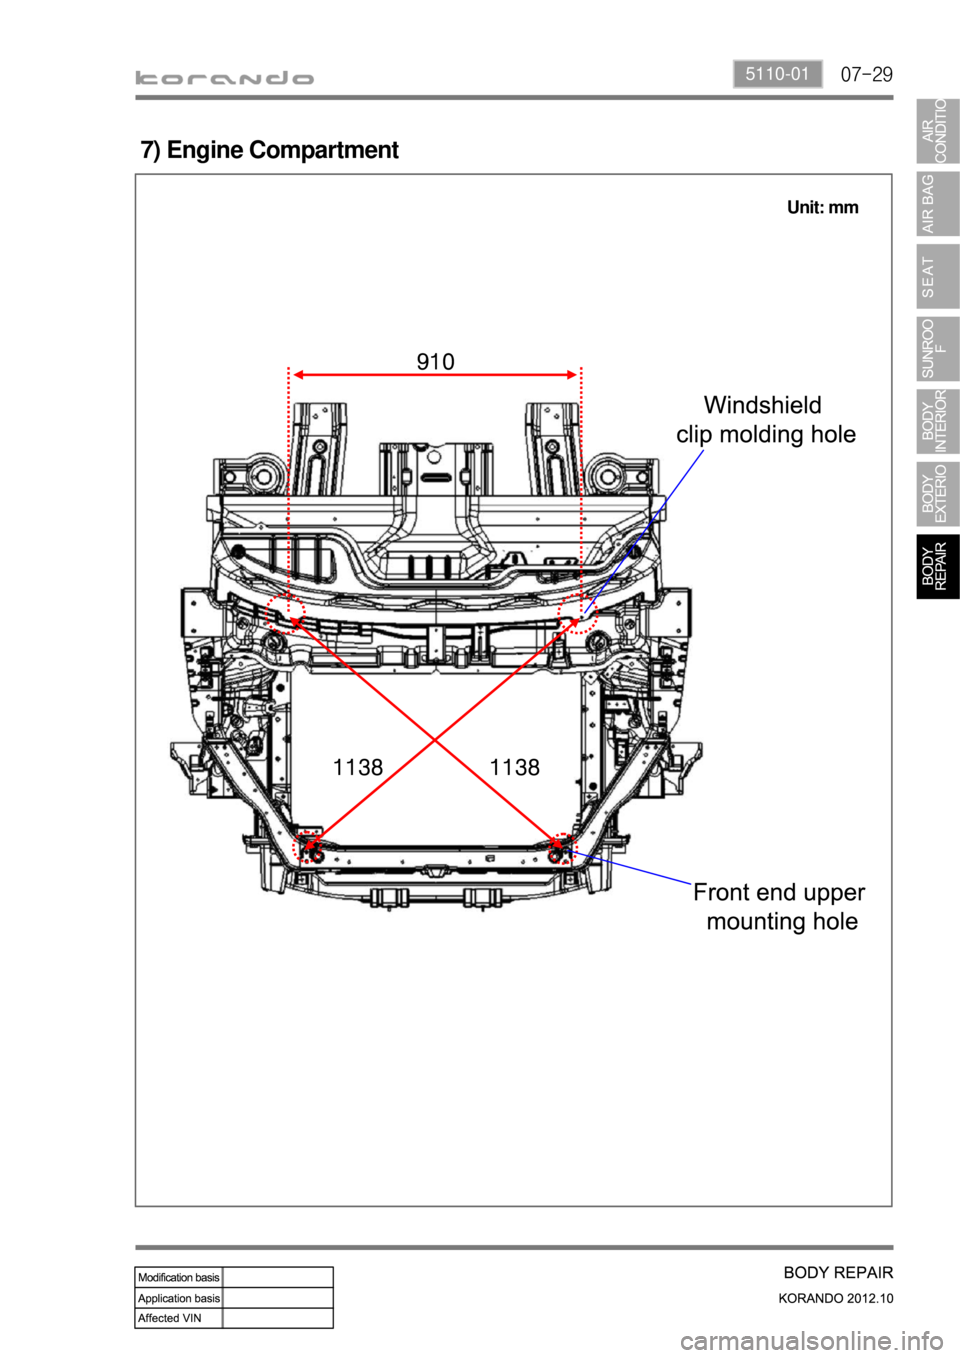 SSANGYONG KORANDO 2012  Service Manual 07-295110-01
7) Engine Compartment
Unit: mm 